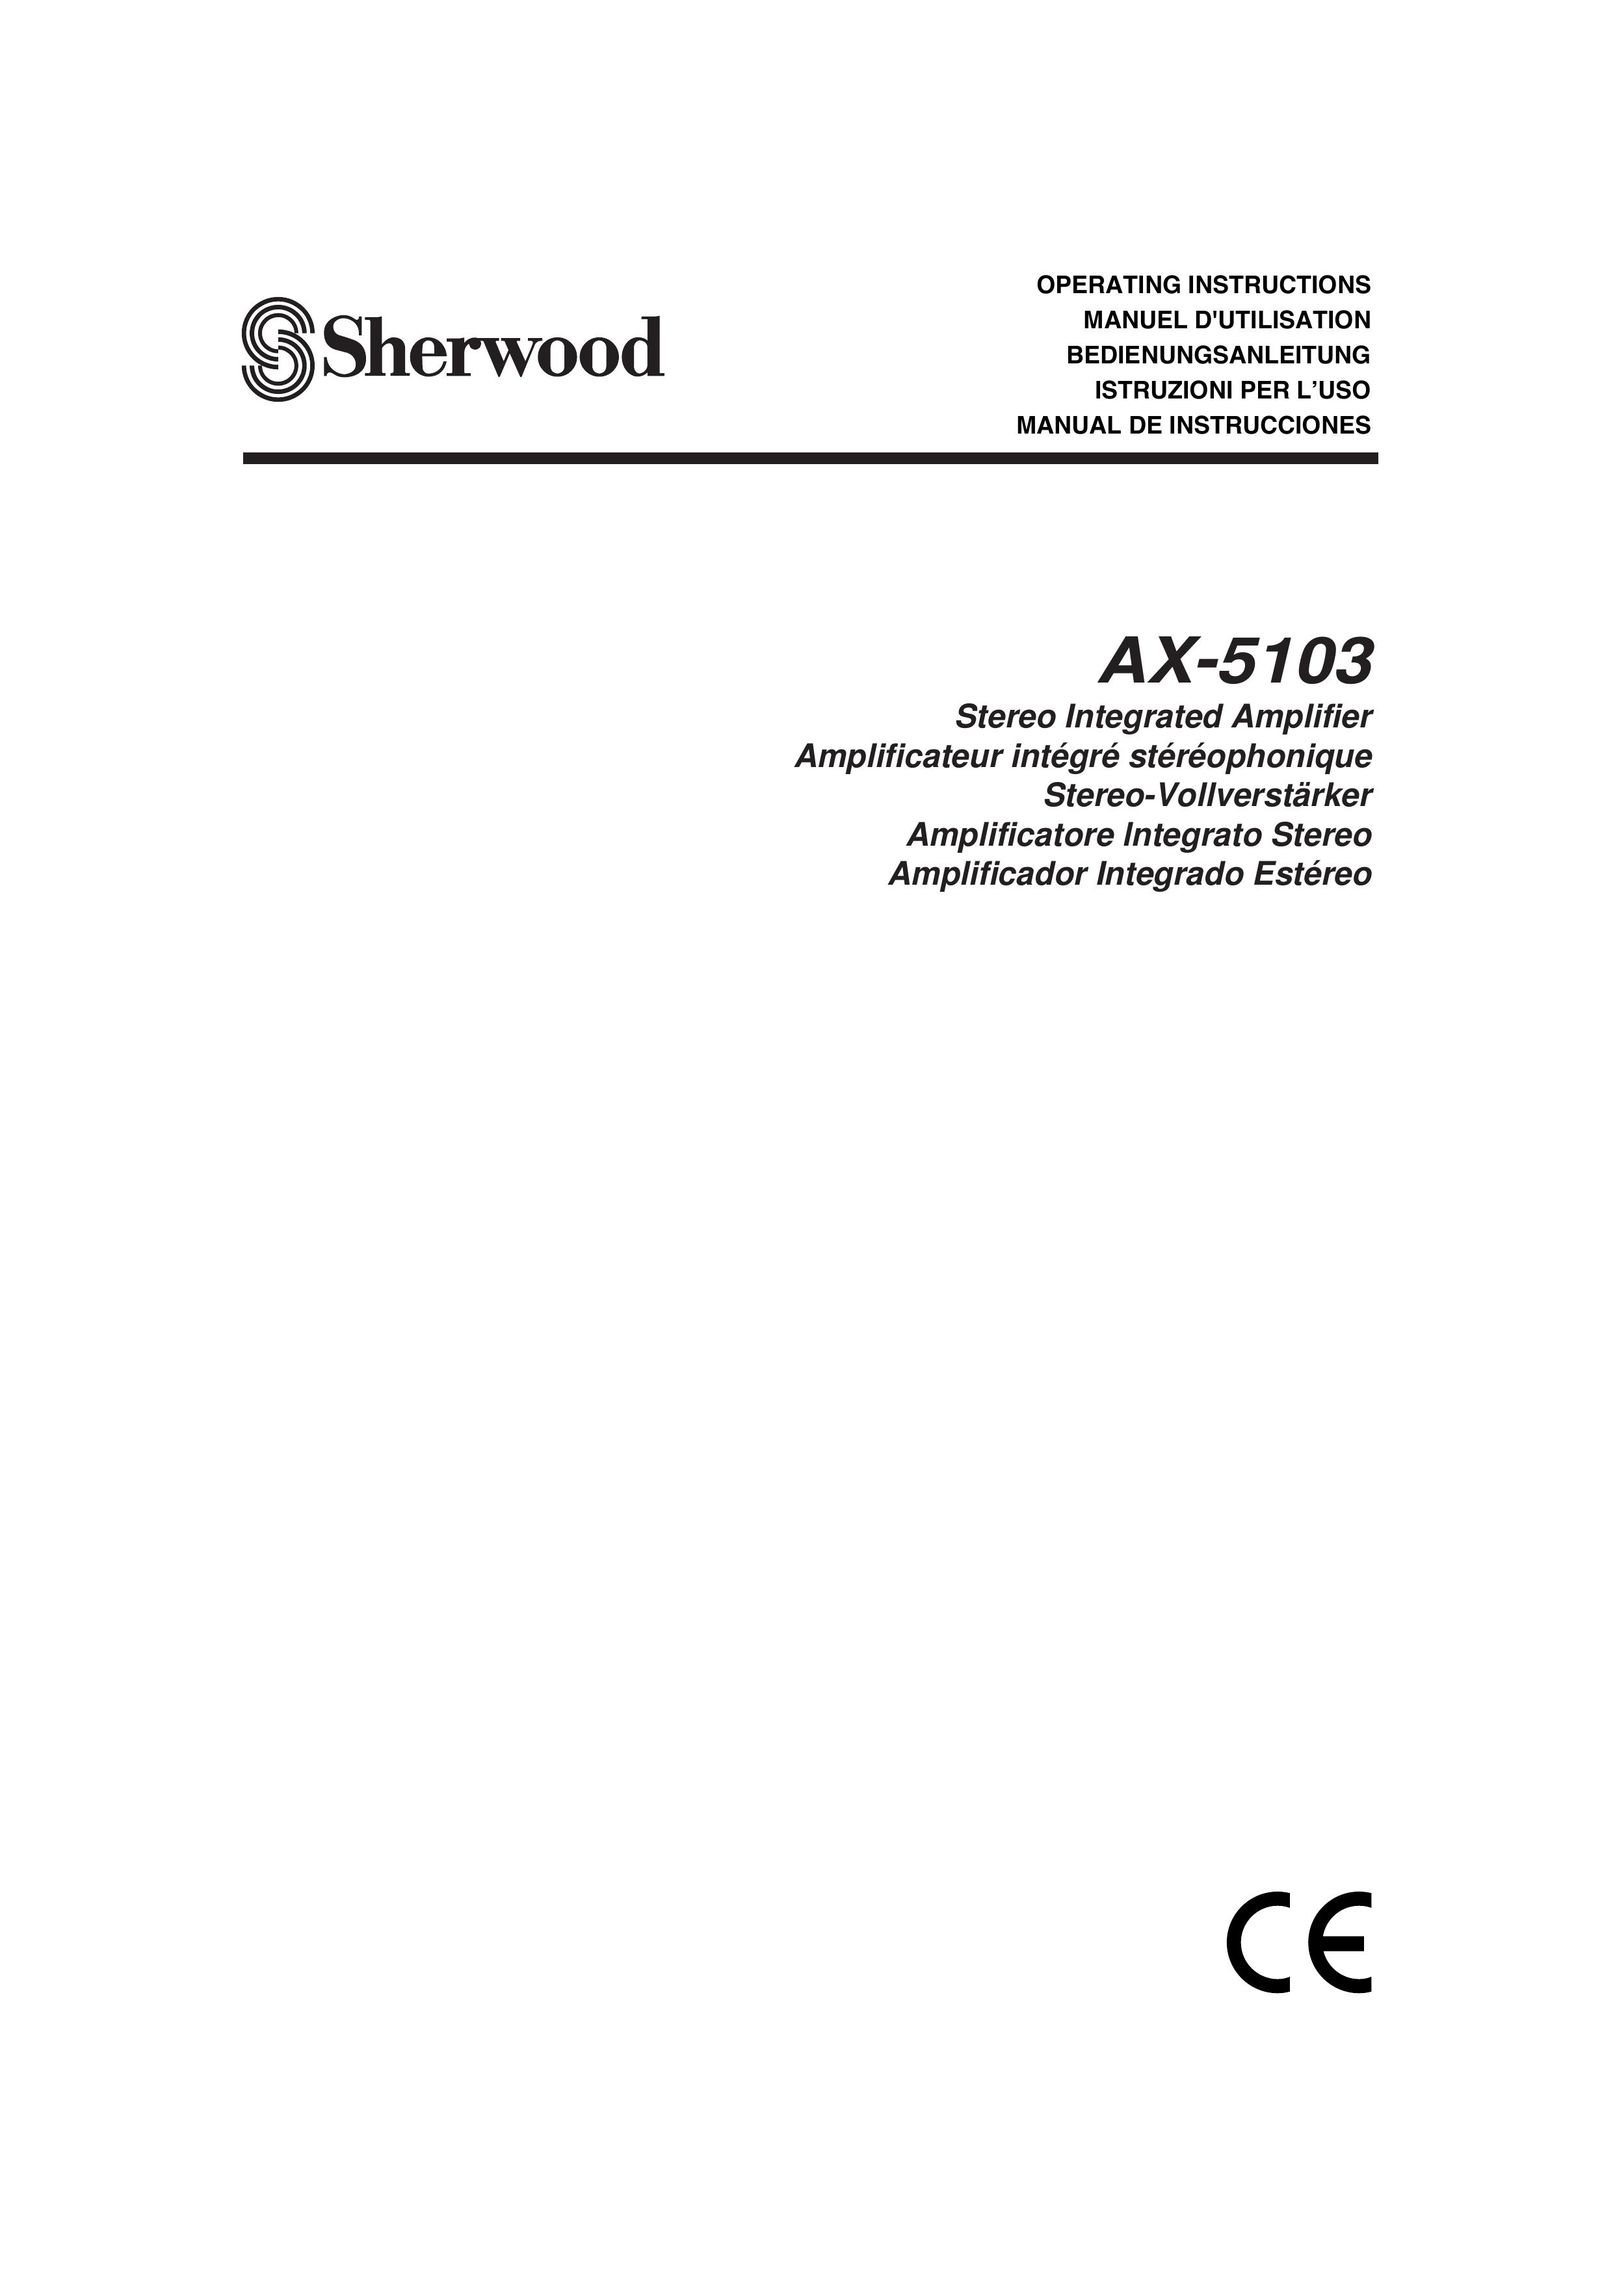 Sherwood AX-5103 Stereo Amplifier User Manual